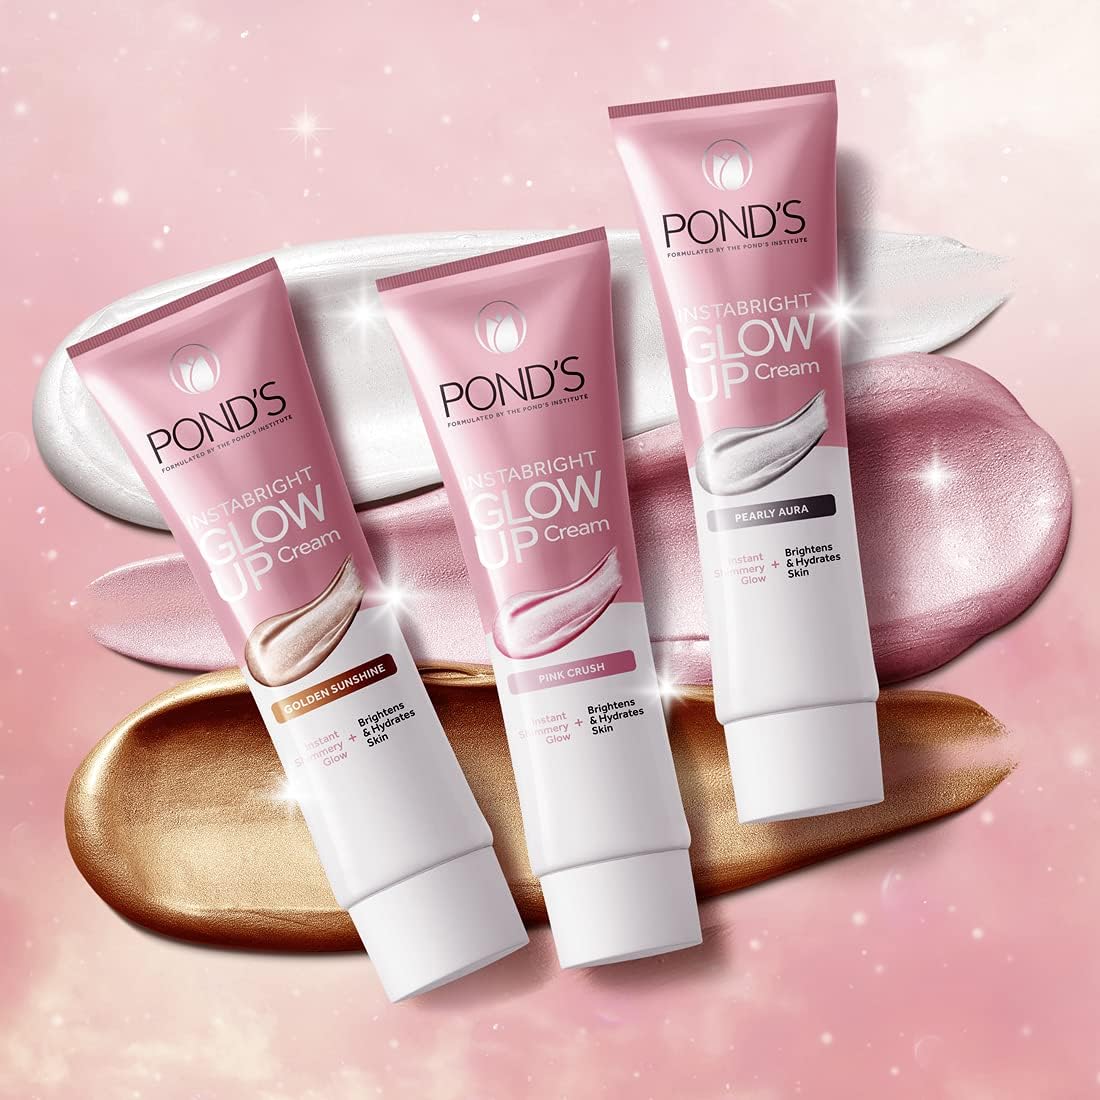 POND'S Face Moisturizing Cream InstaBright Illuminating Pink Crush, For Glowing Skin, 20g